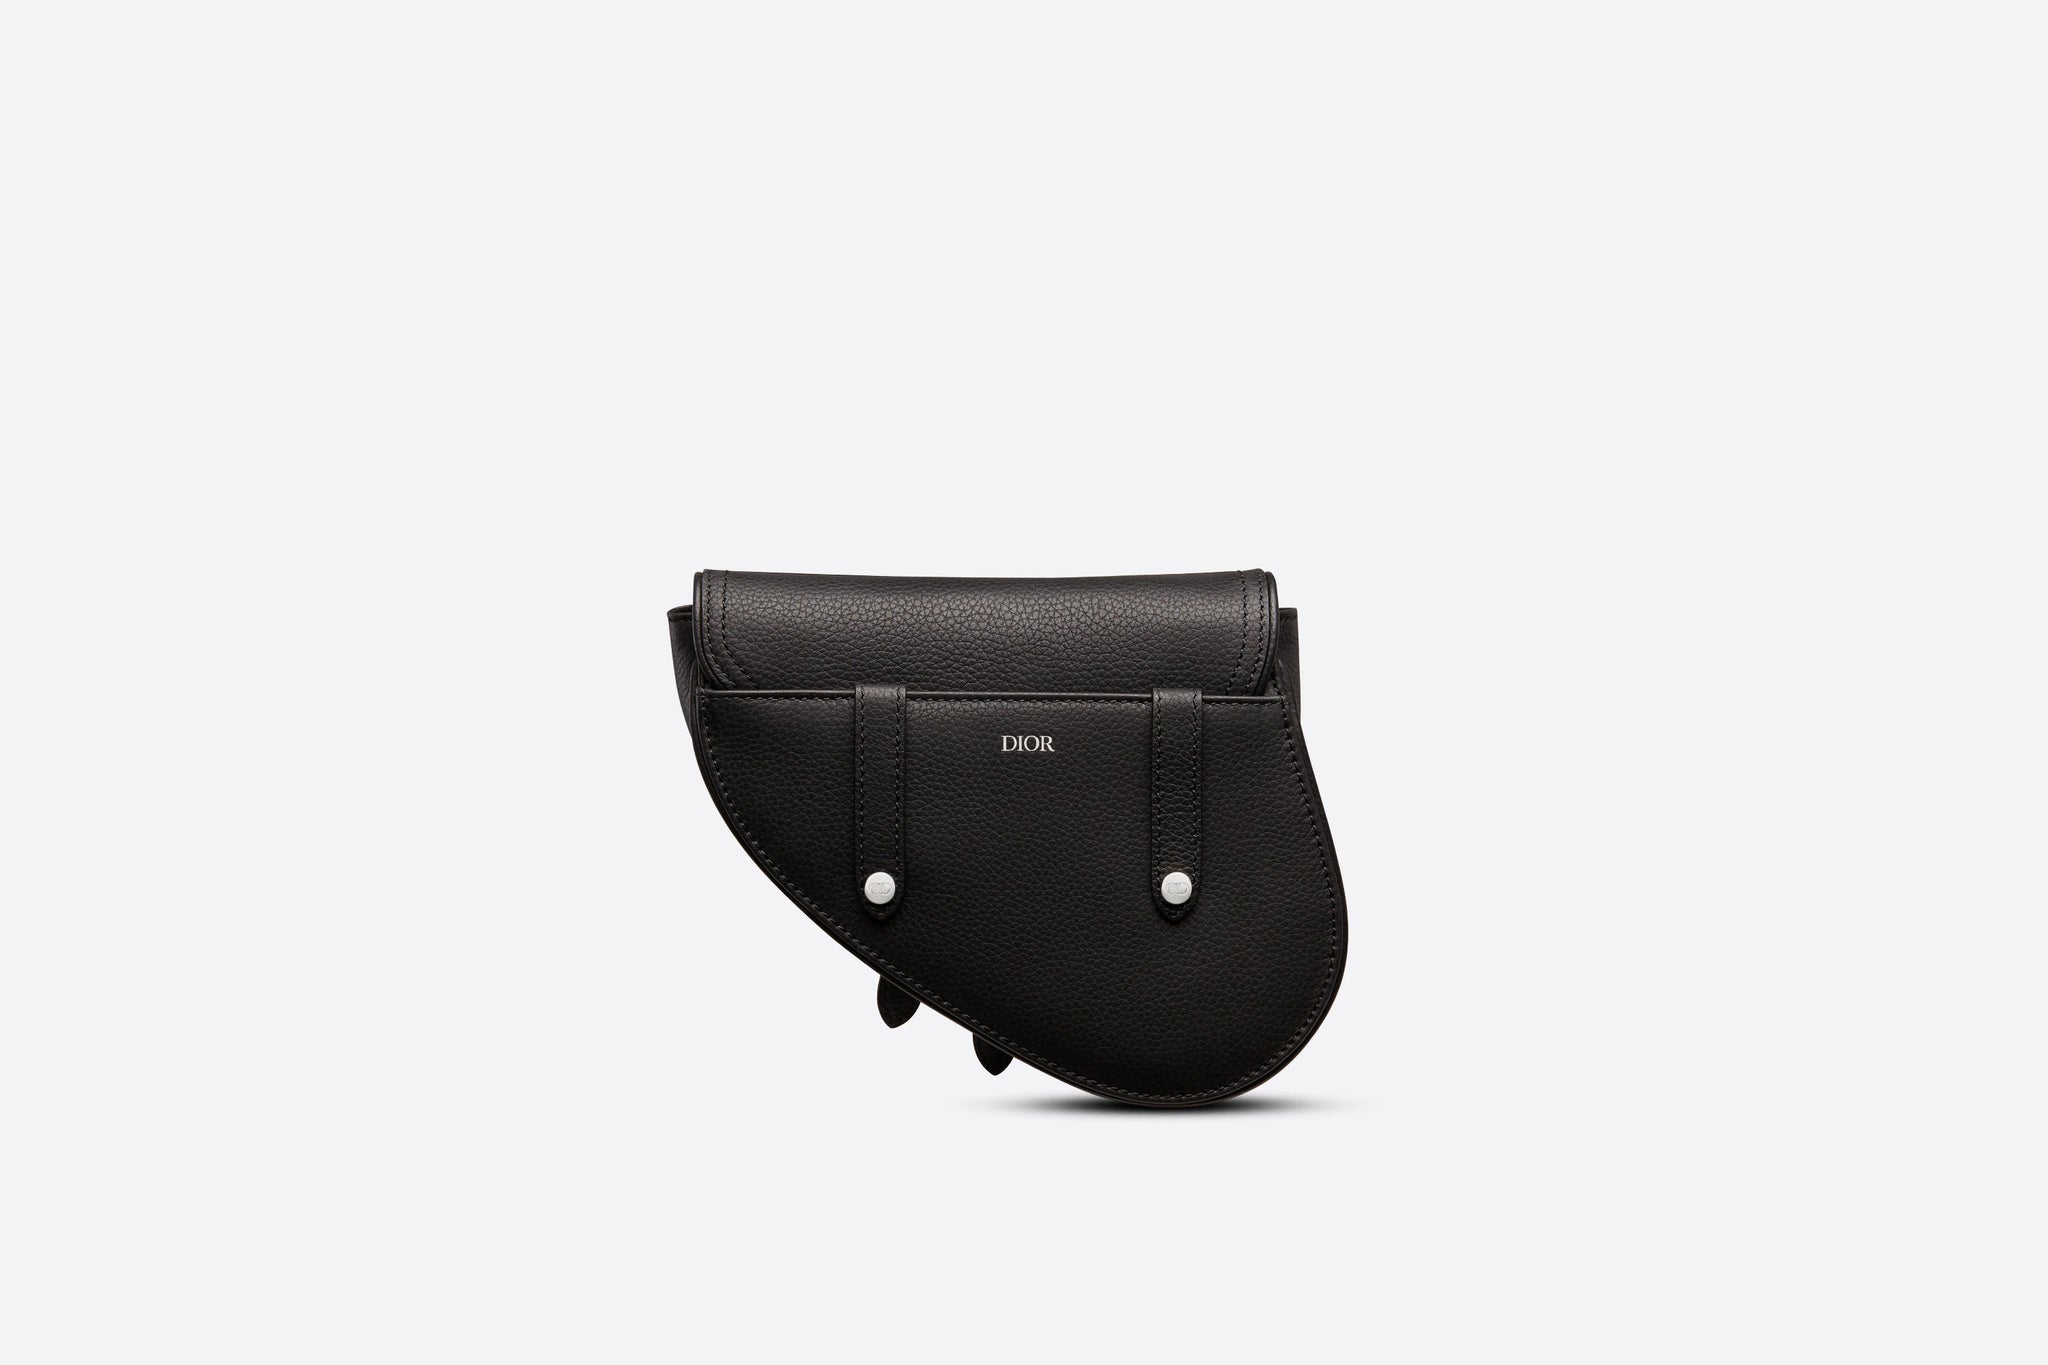 Dior x CACTUS JACK Mini Saddle Bag Black